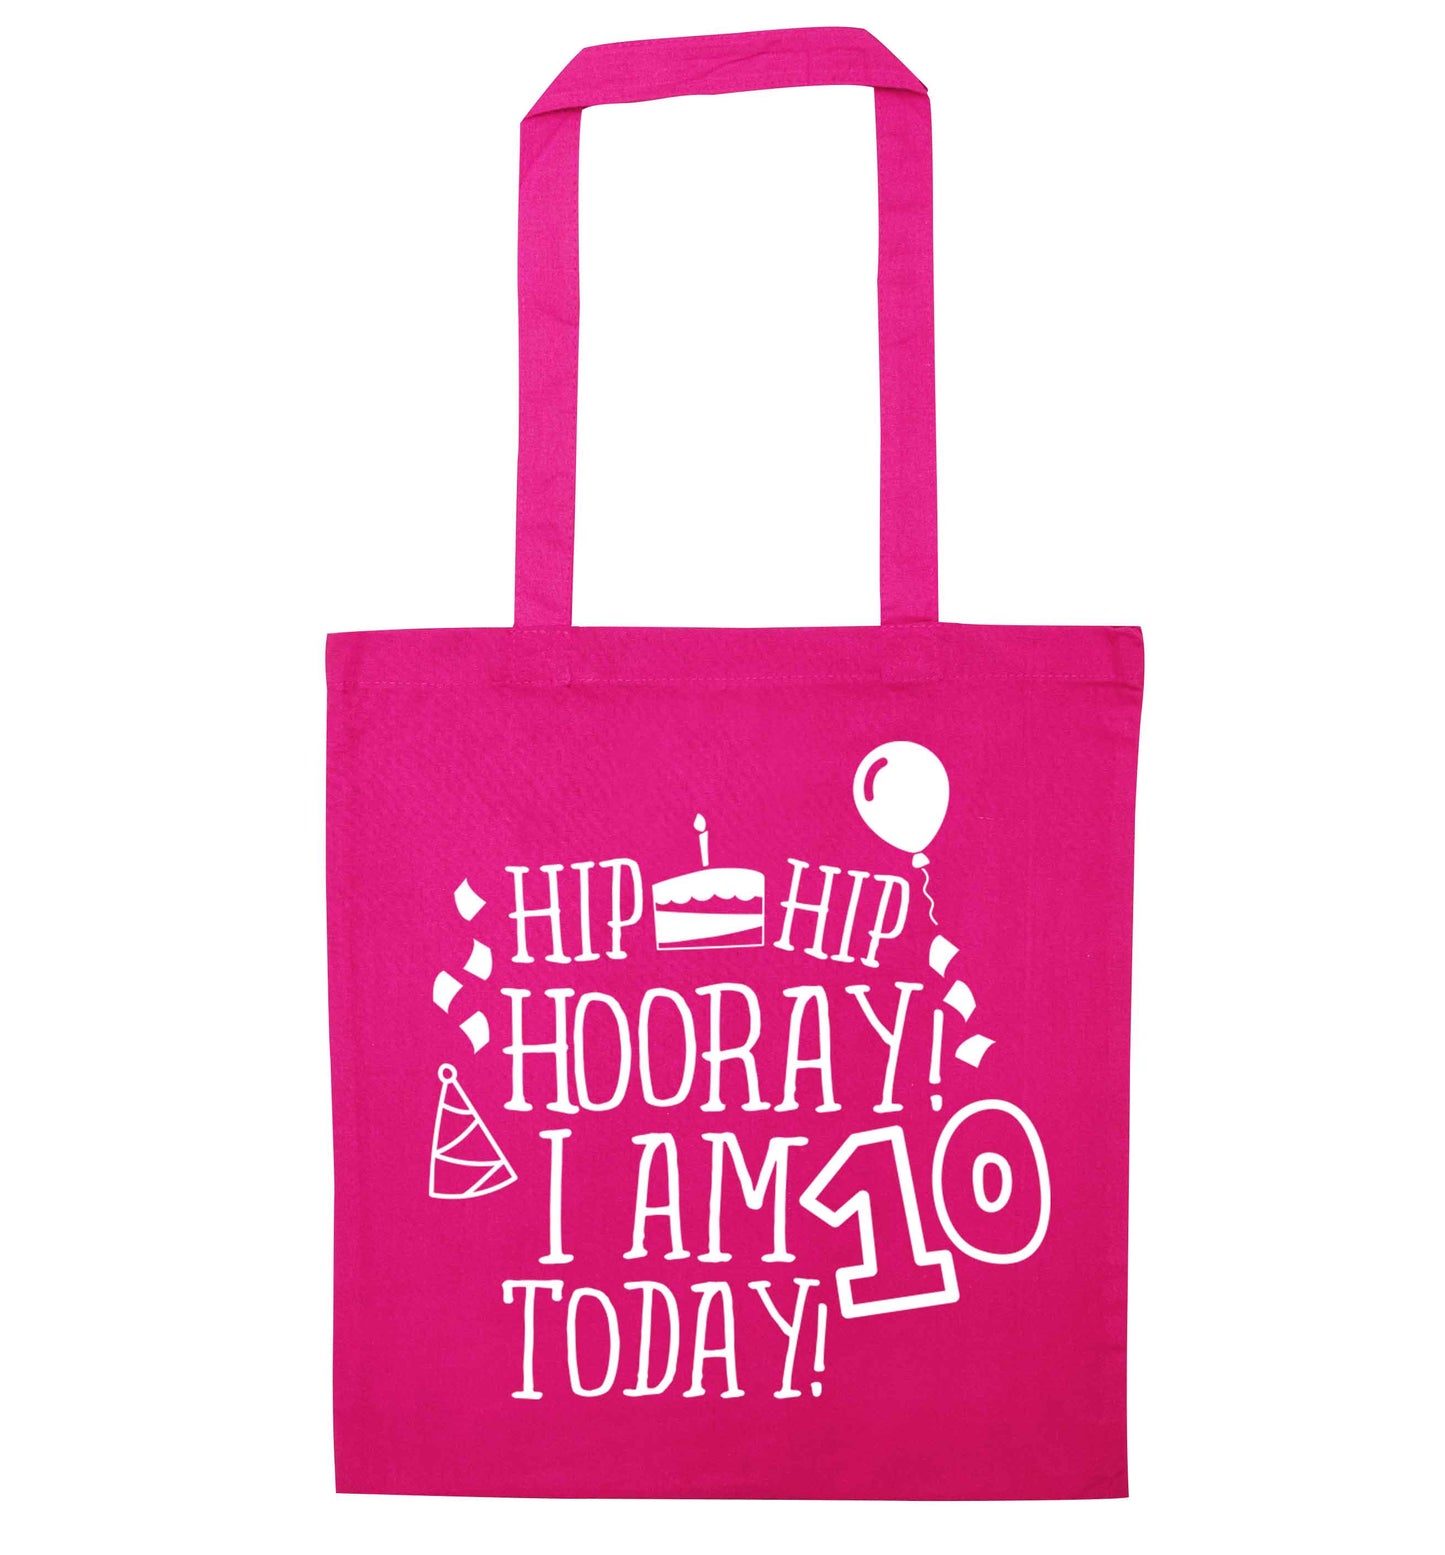 Hip hip hooray I am ten today! pink tote bag